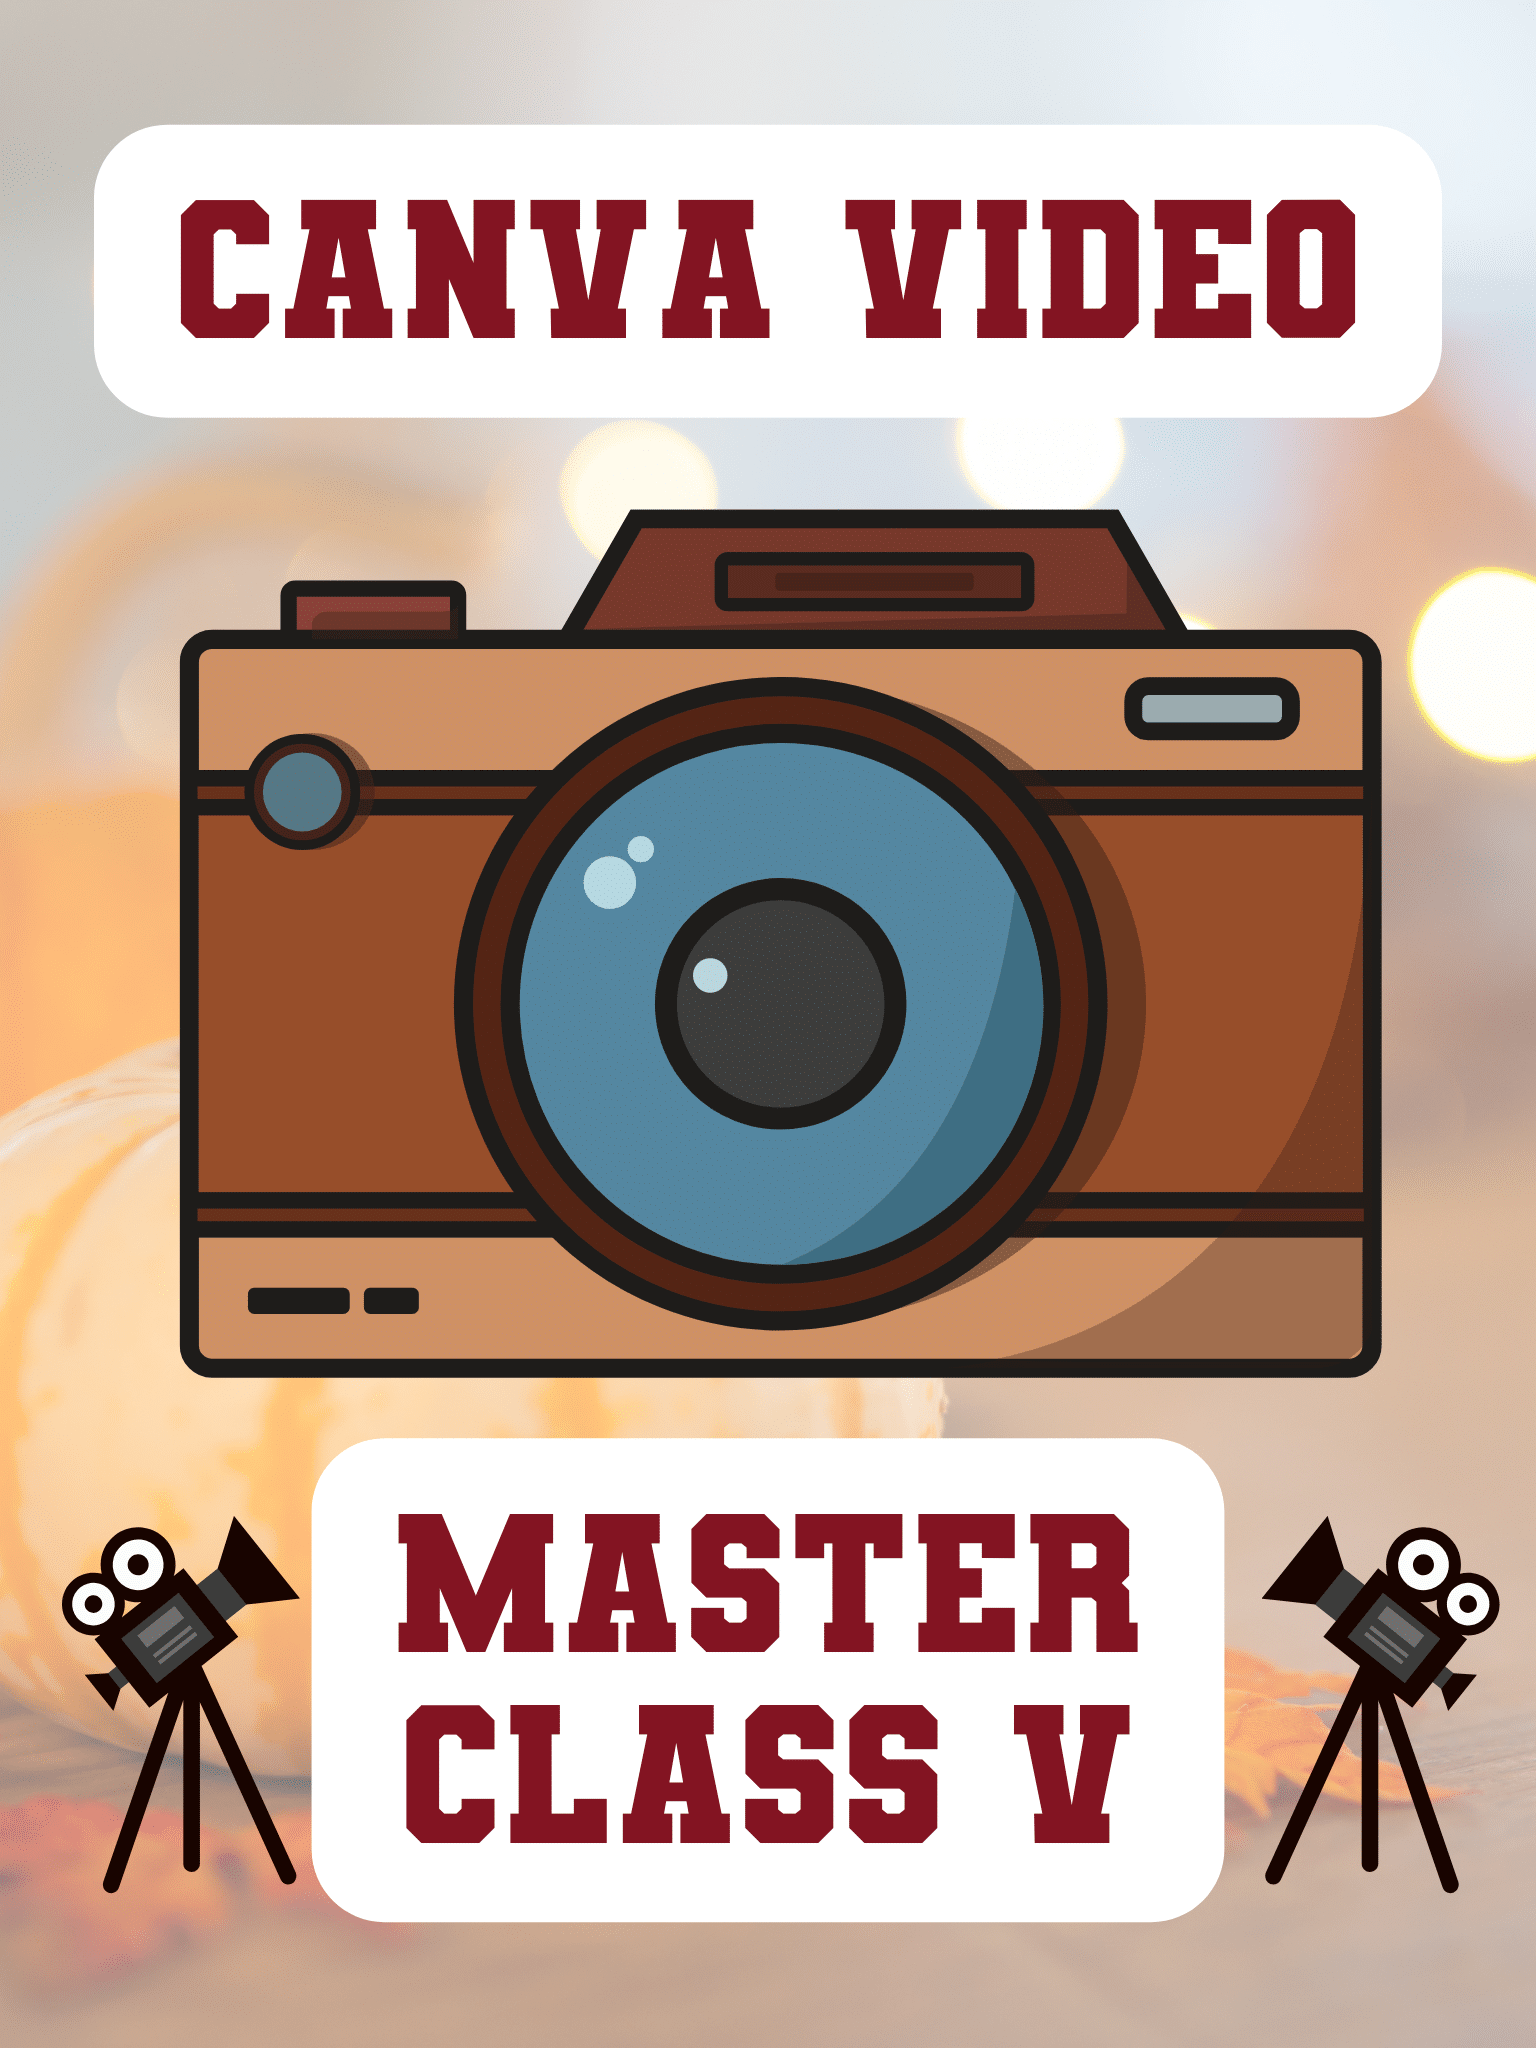 Canva Master class V video